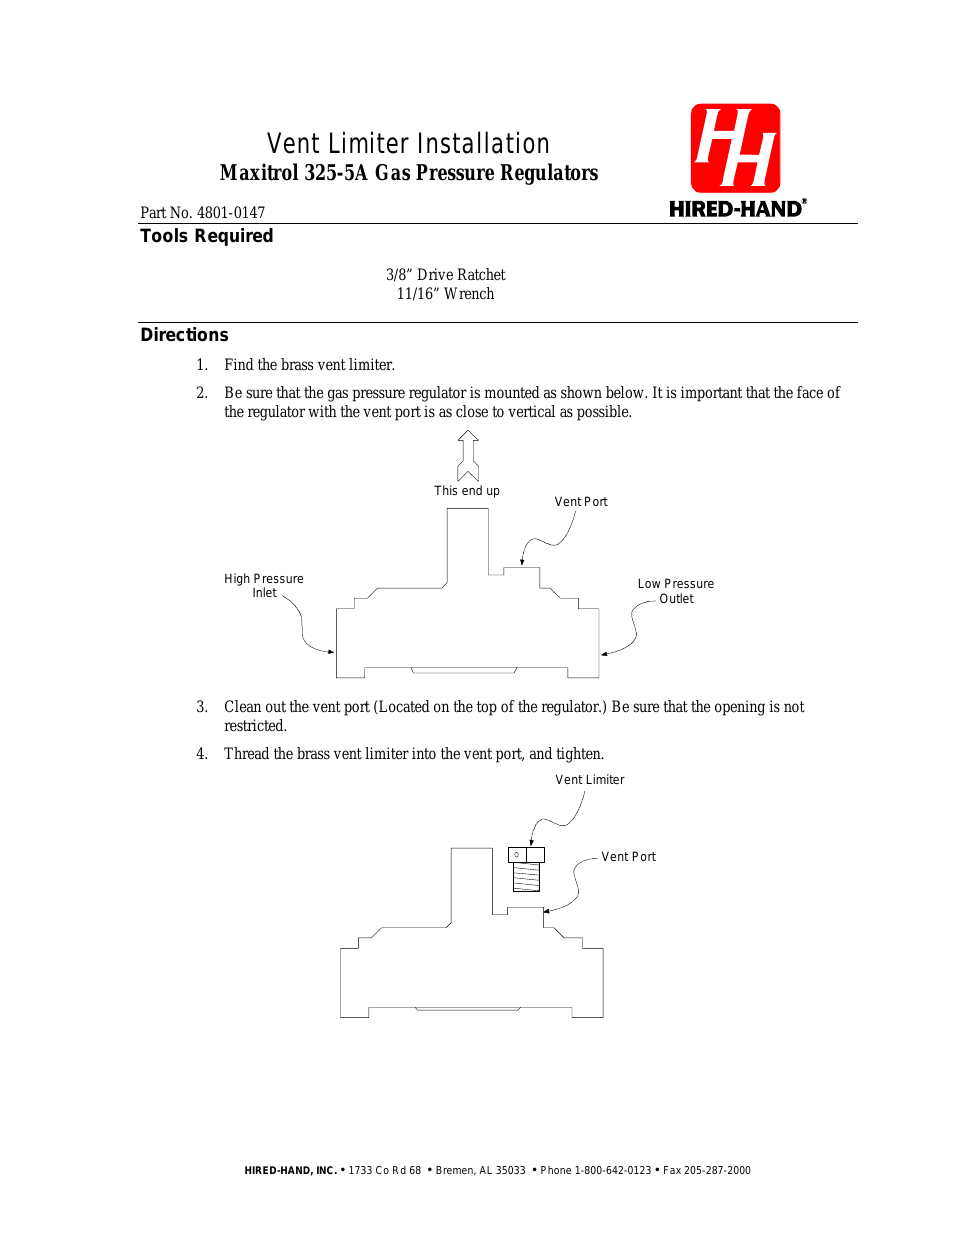 Super-Savers (Forced Air Heaters) XL: Vent Limiter Installation Maxitrol 325-5A Gas Pressure Regulators